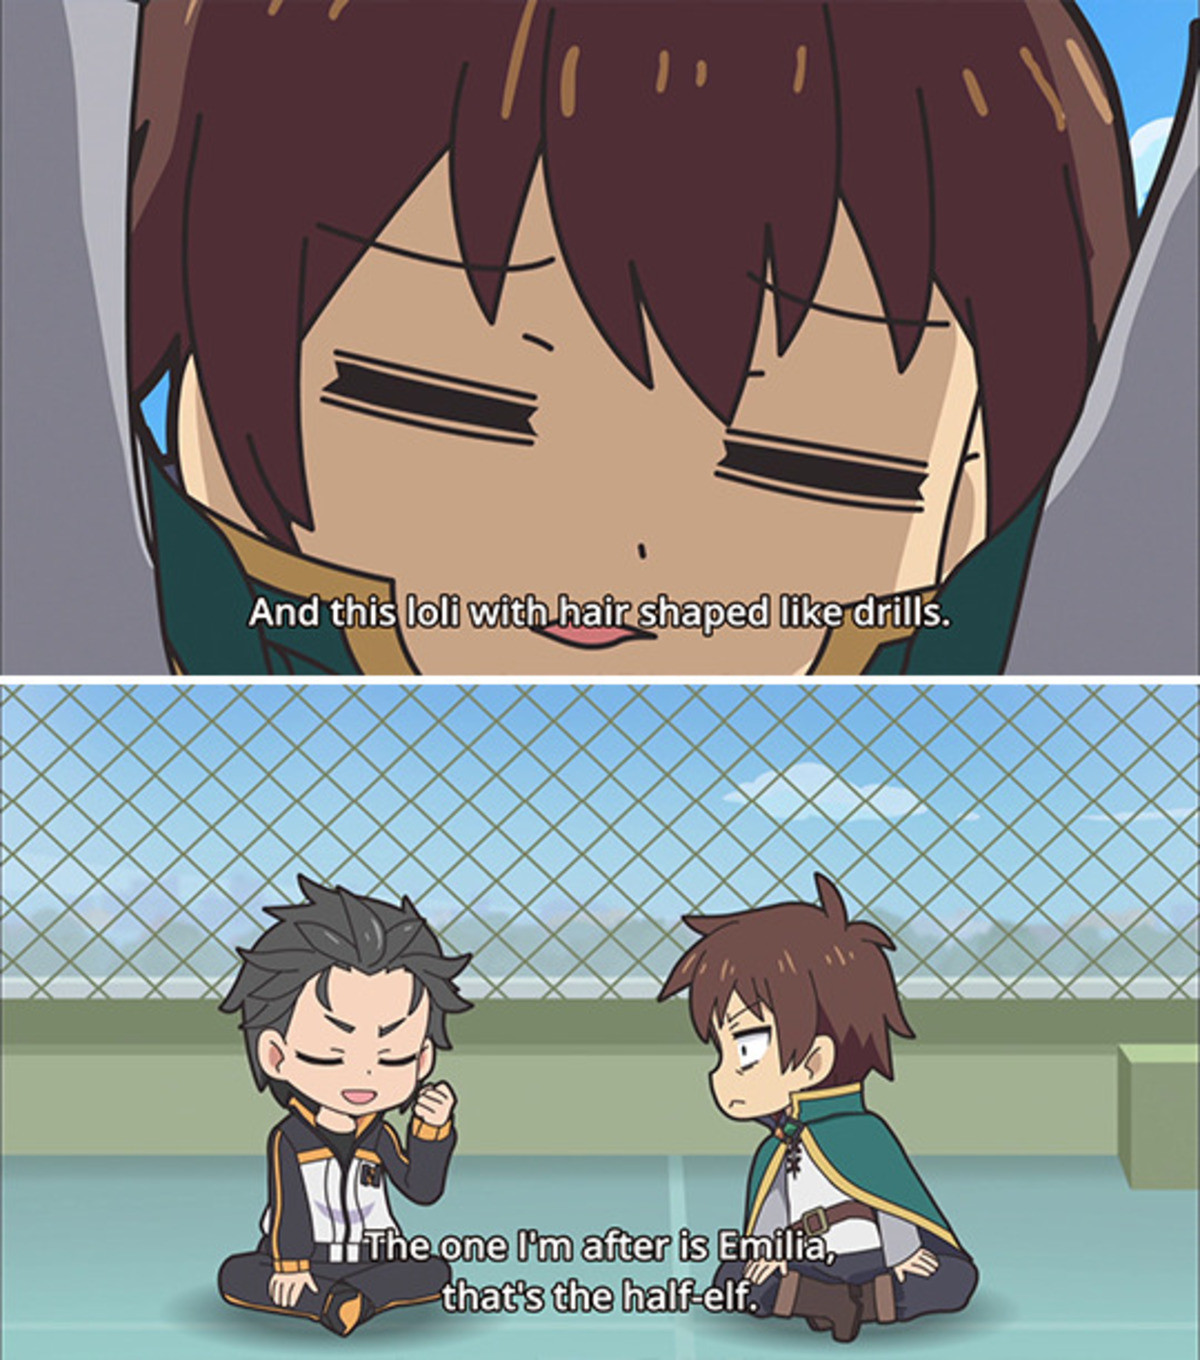 Anime Memes - Undoubtedly the most pain Kazuma and Subaru have